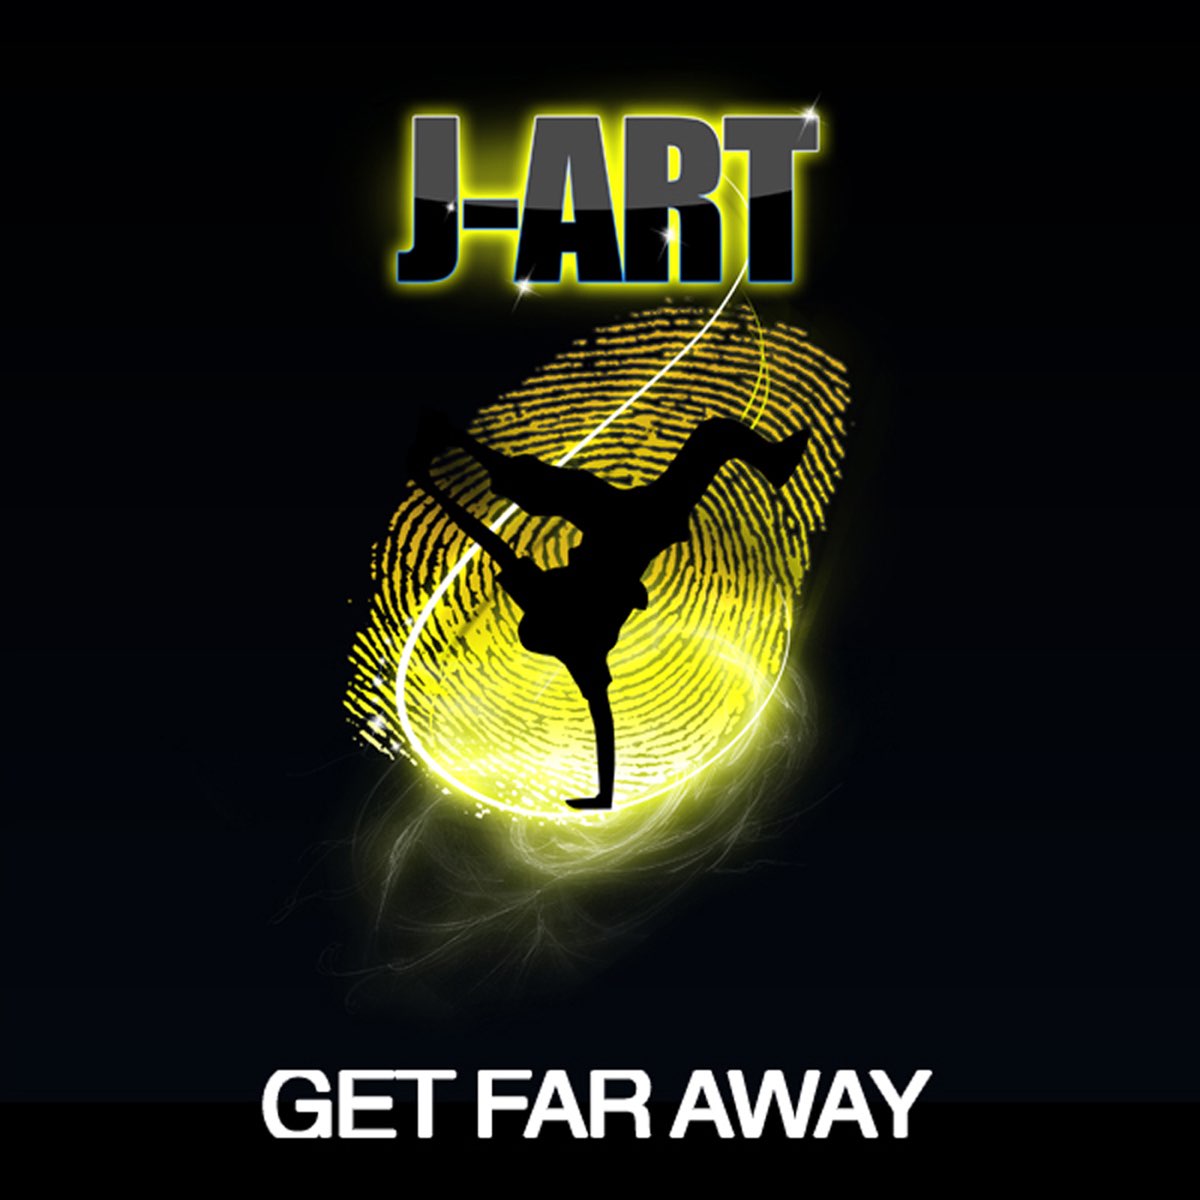 Get far away. Album Art get away get away. Album Art 3 Fly away (Radio record). Get this far